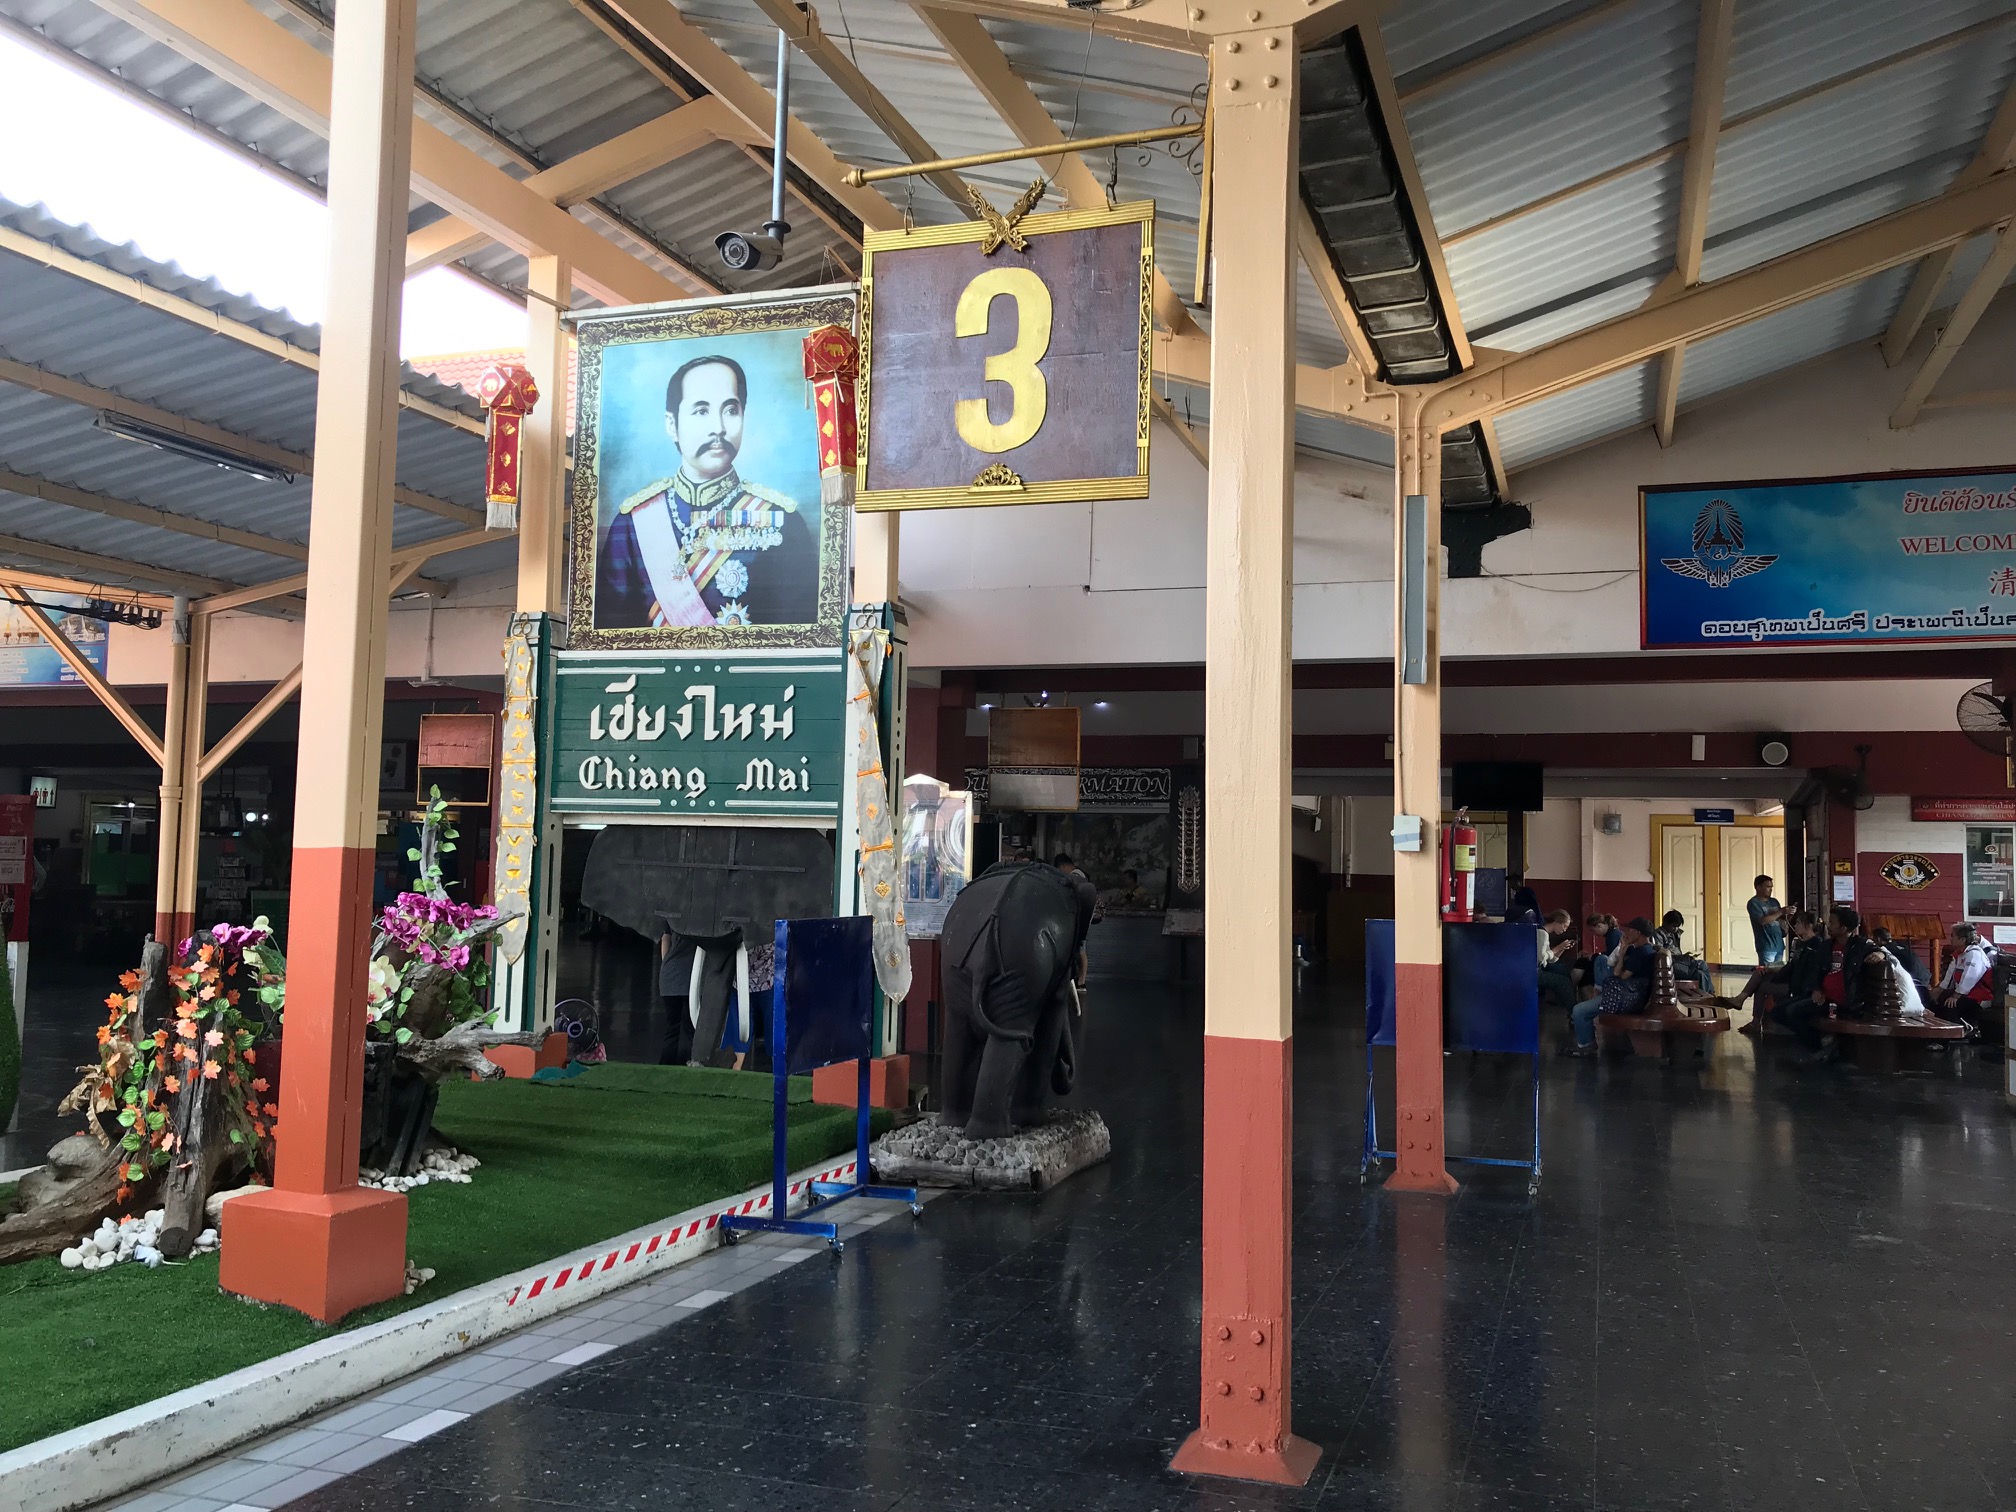 Chiang mai State Railway